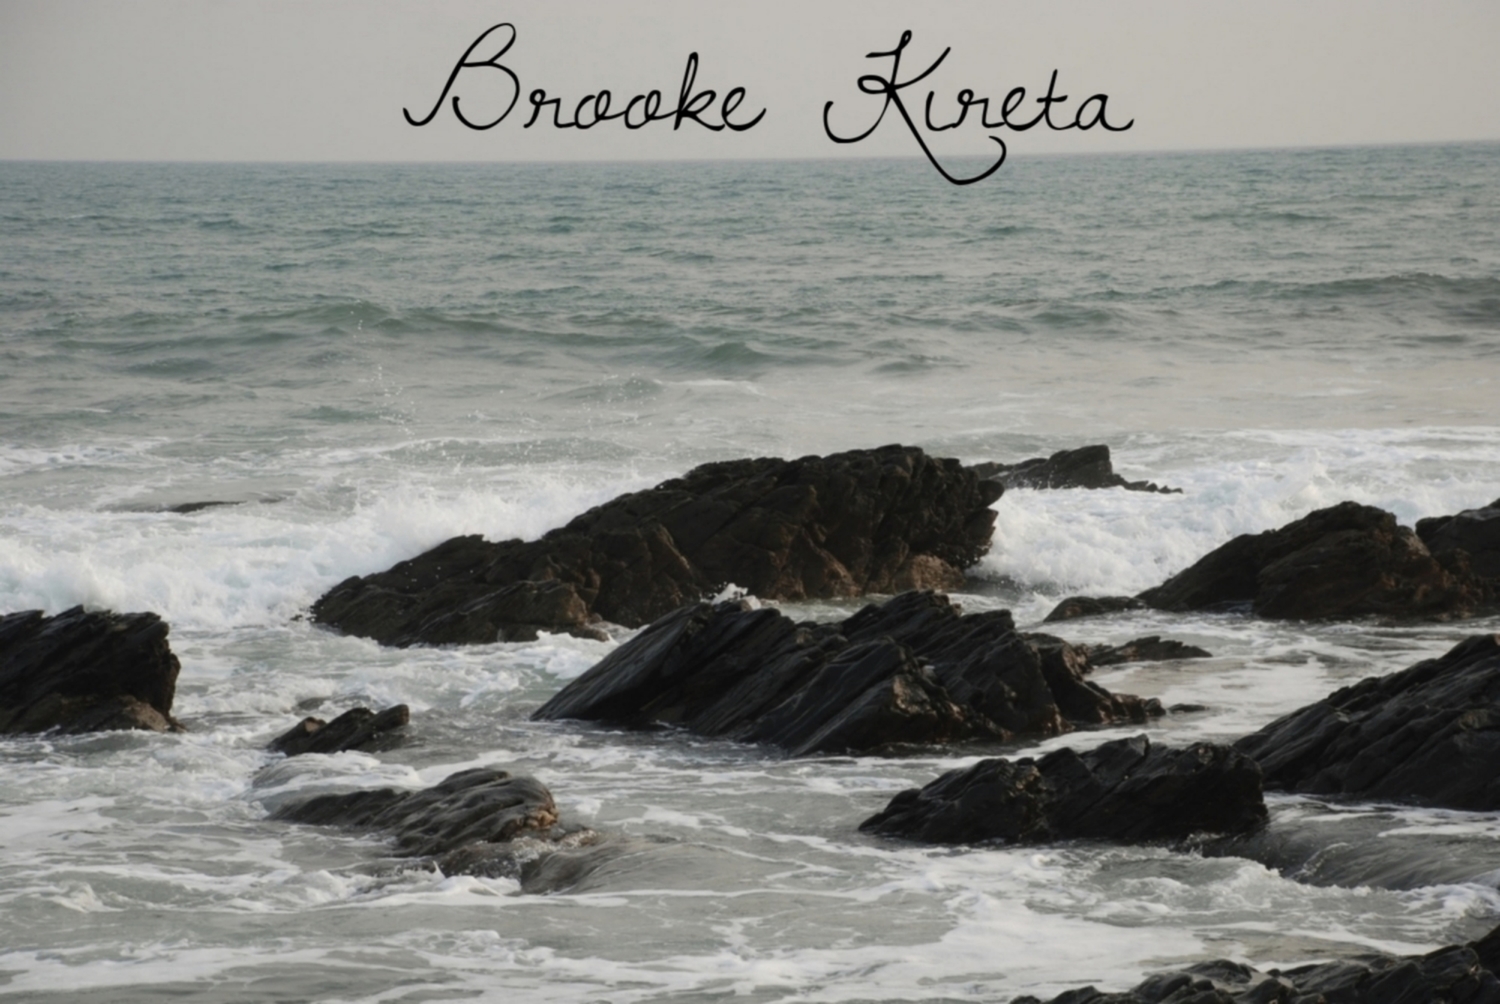 Brooke Kireta